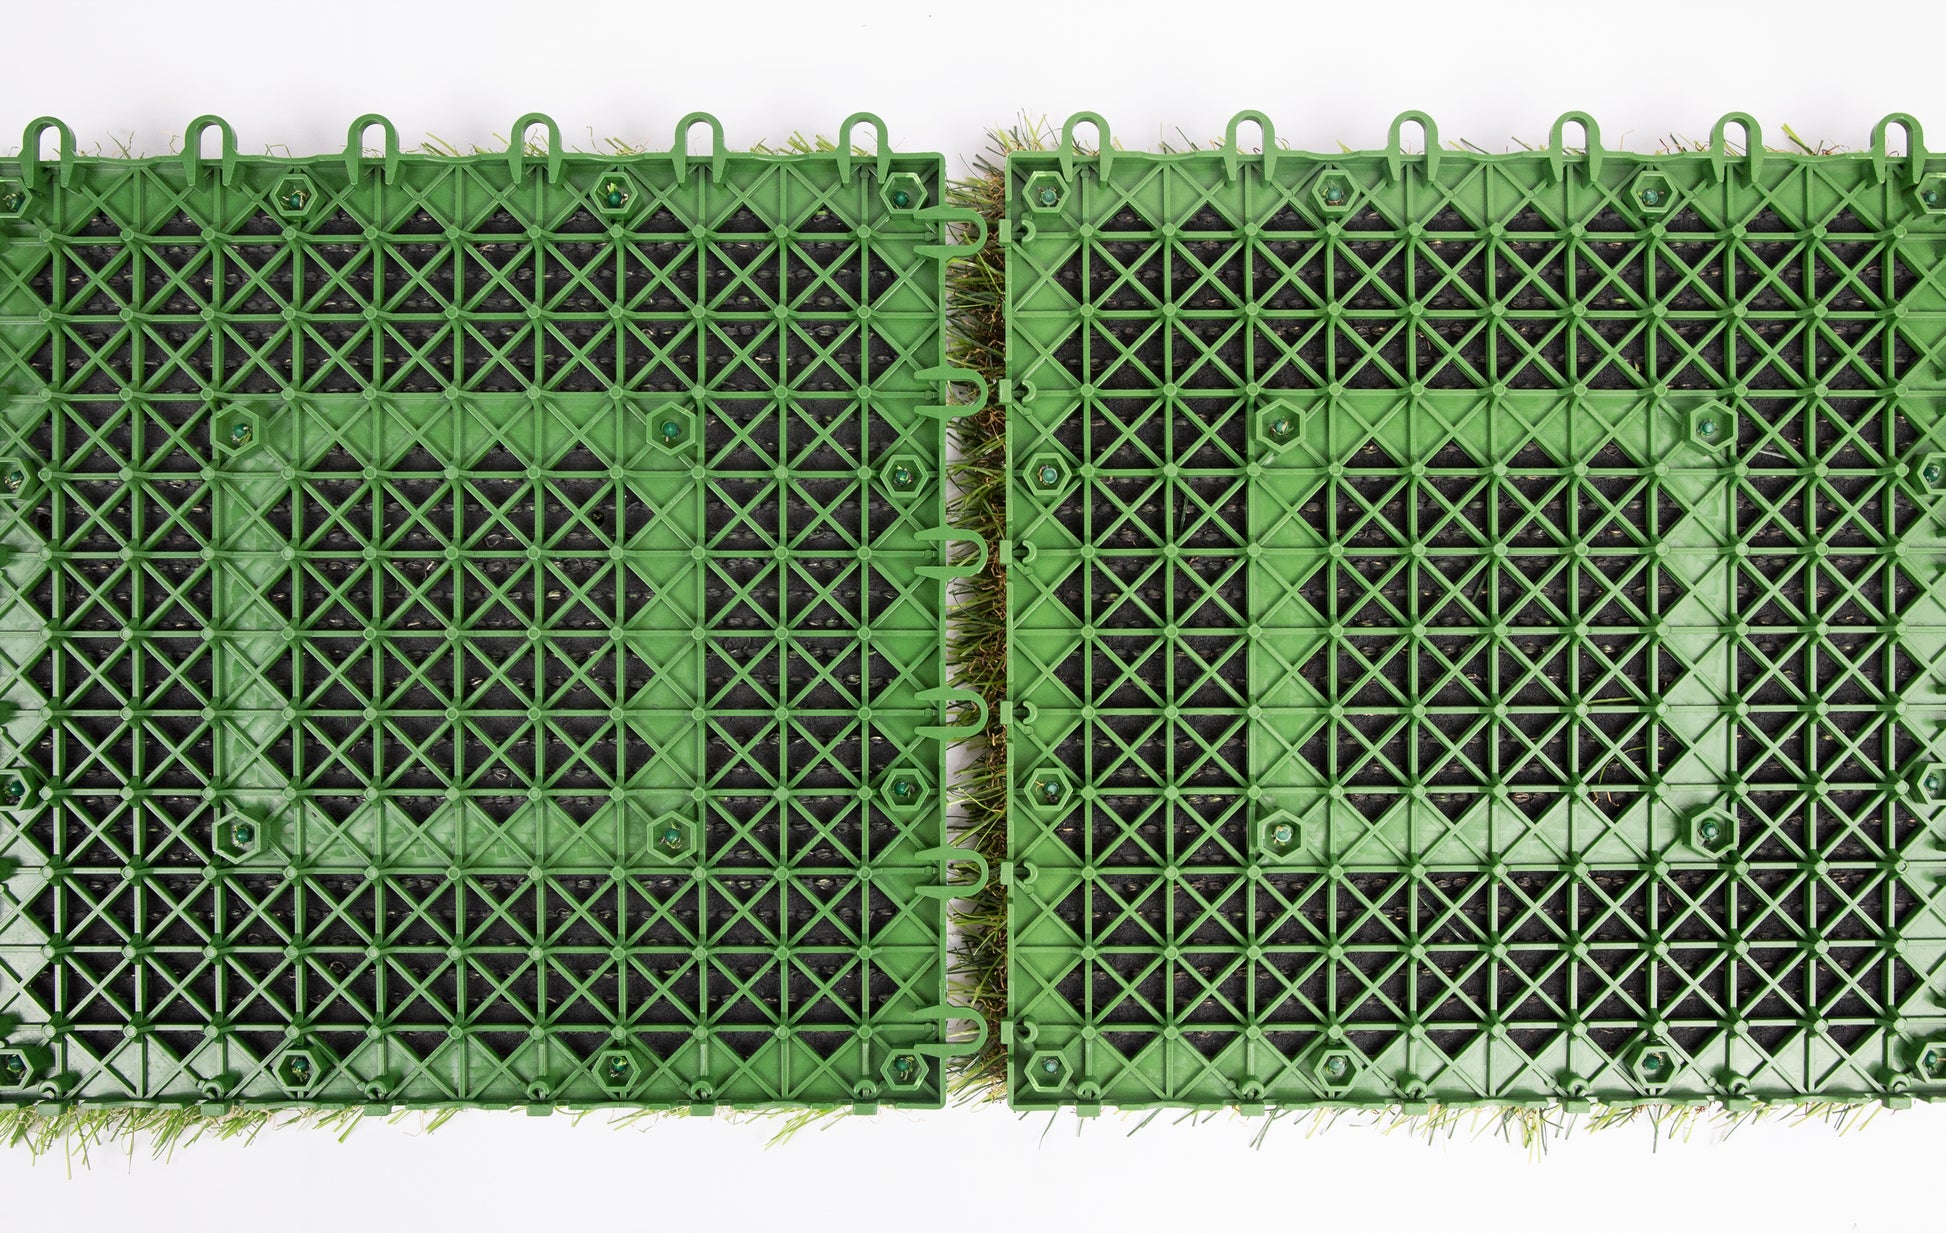 Artificial Grass Turf Panel/Interlocking Grass Flooring/Lawn Floor Self-draining Mat